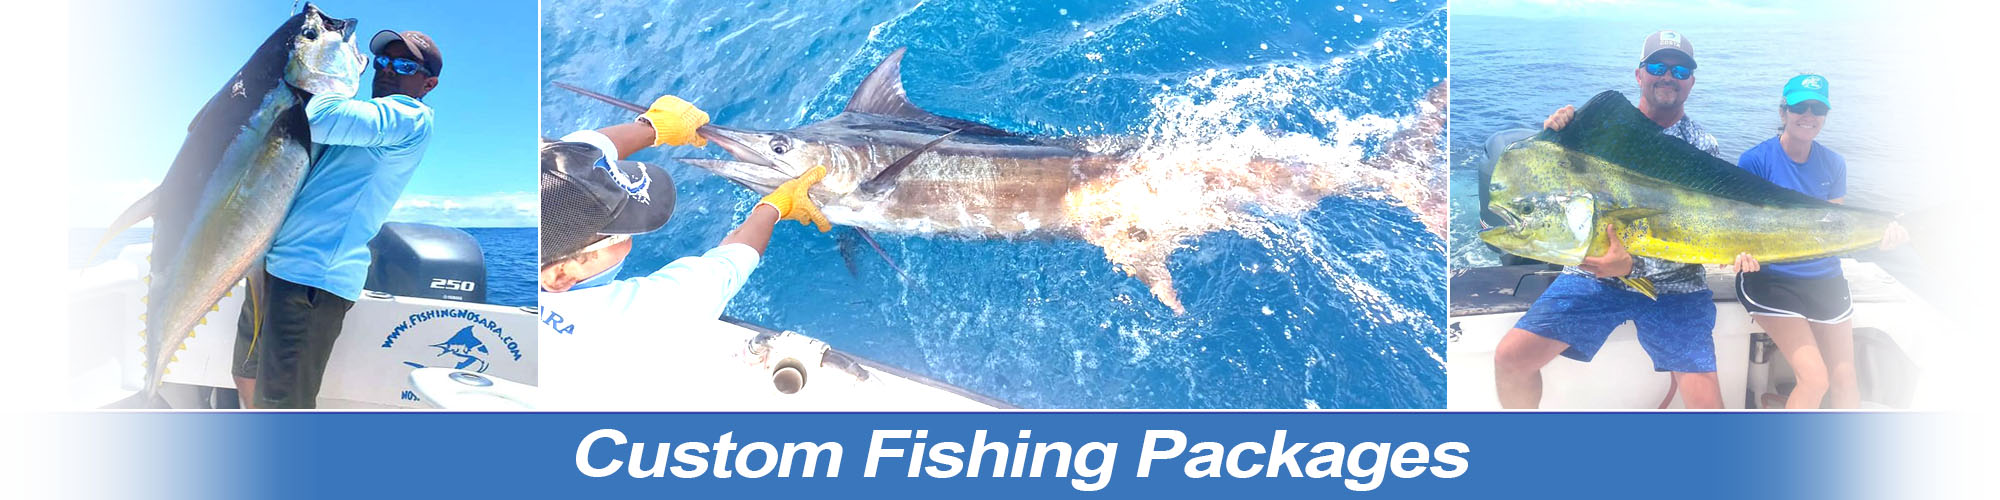 Custom Fishing Packages